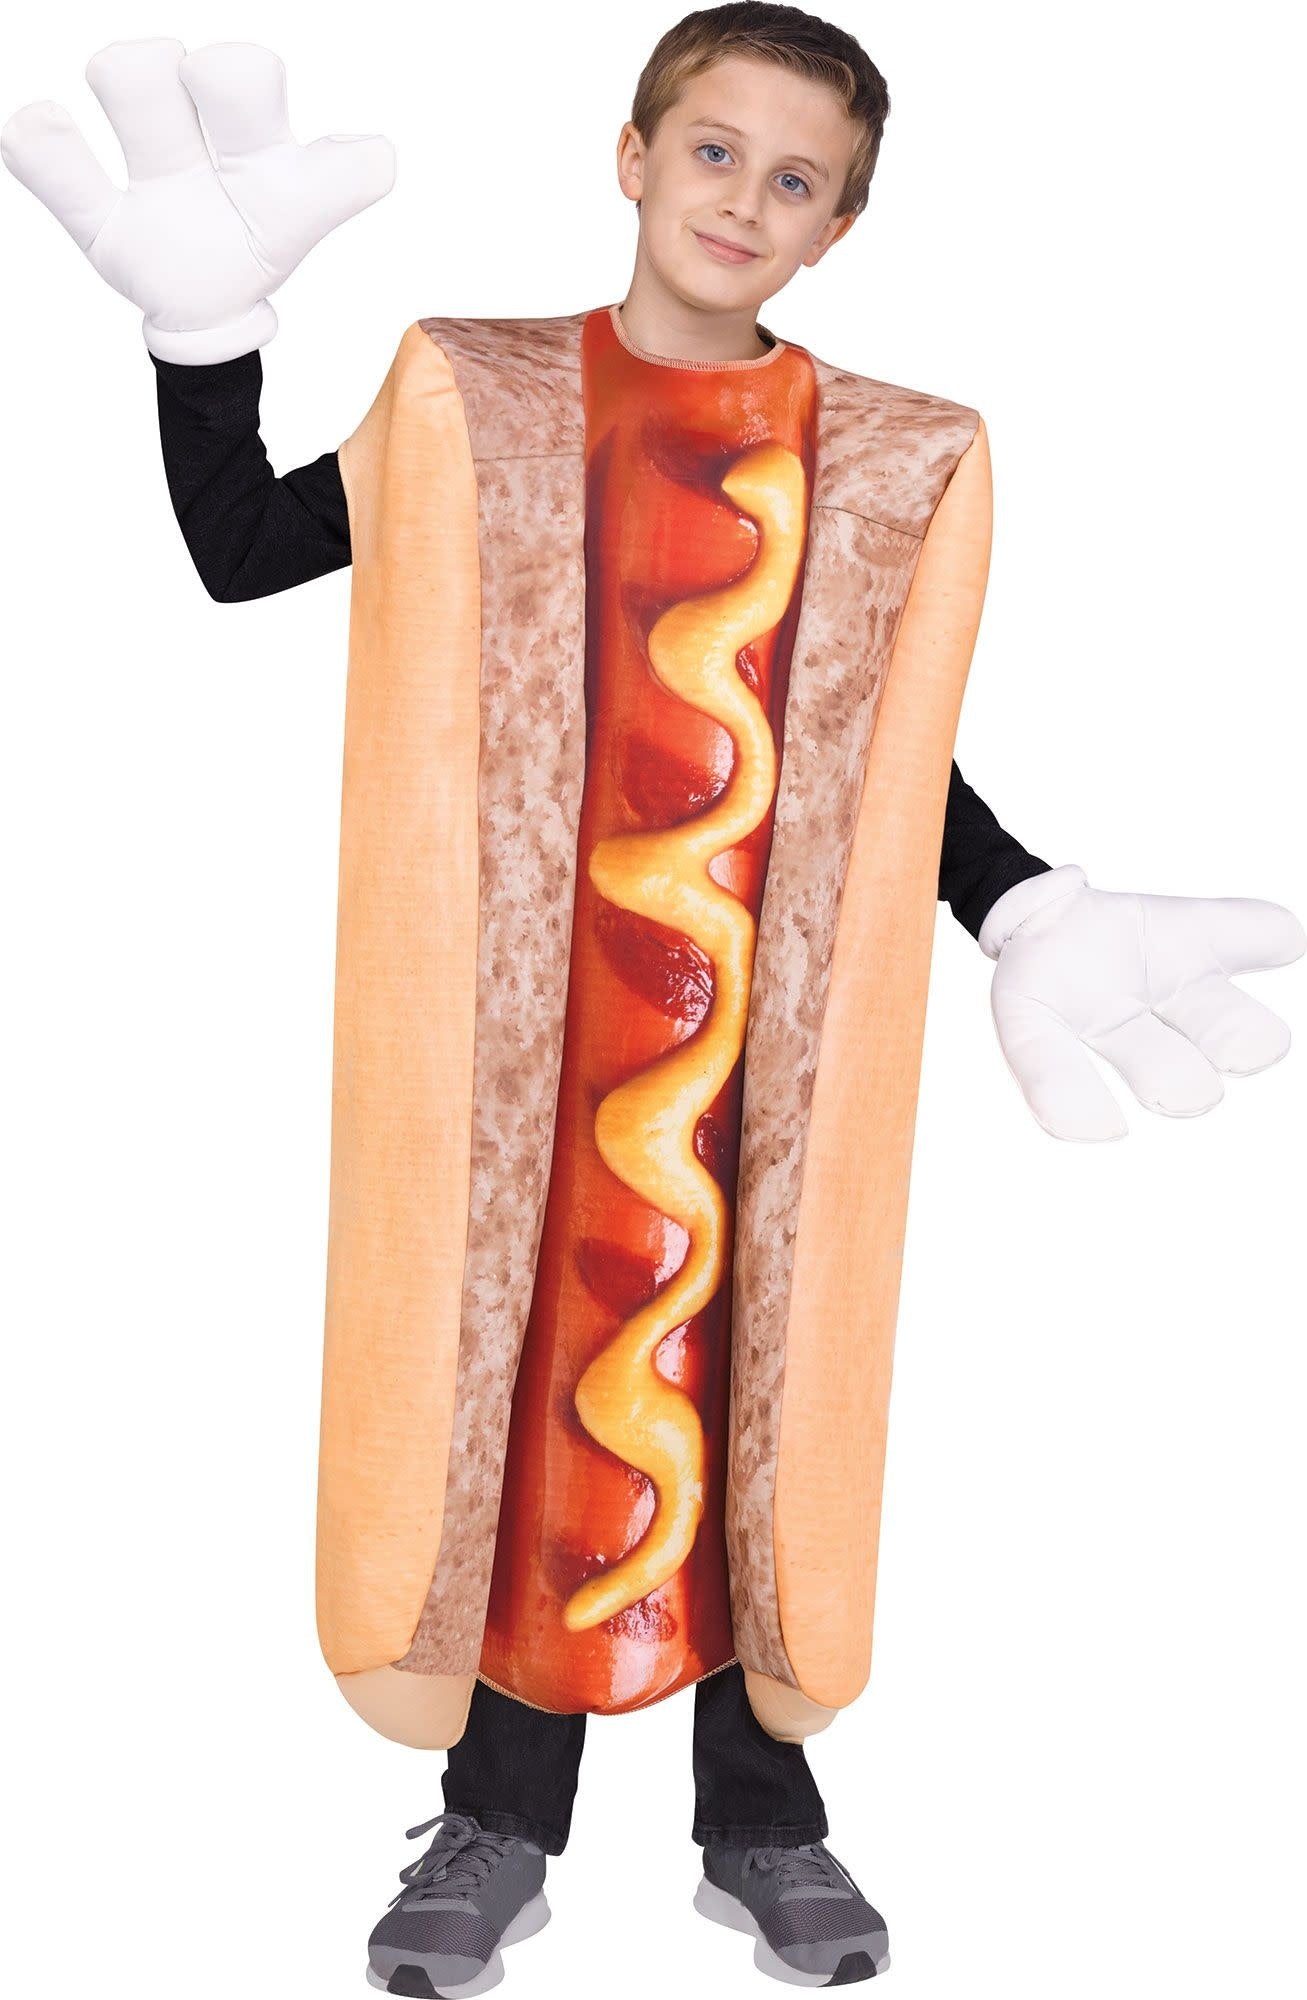 Hot Dog - Standard